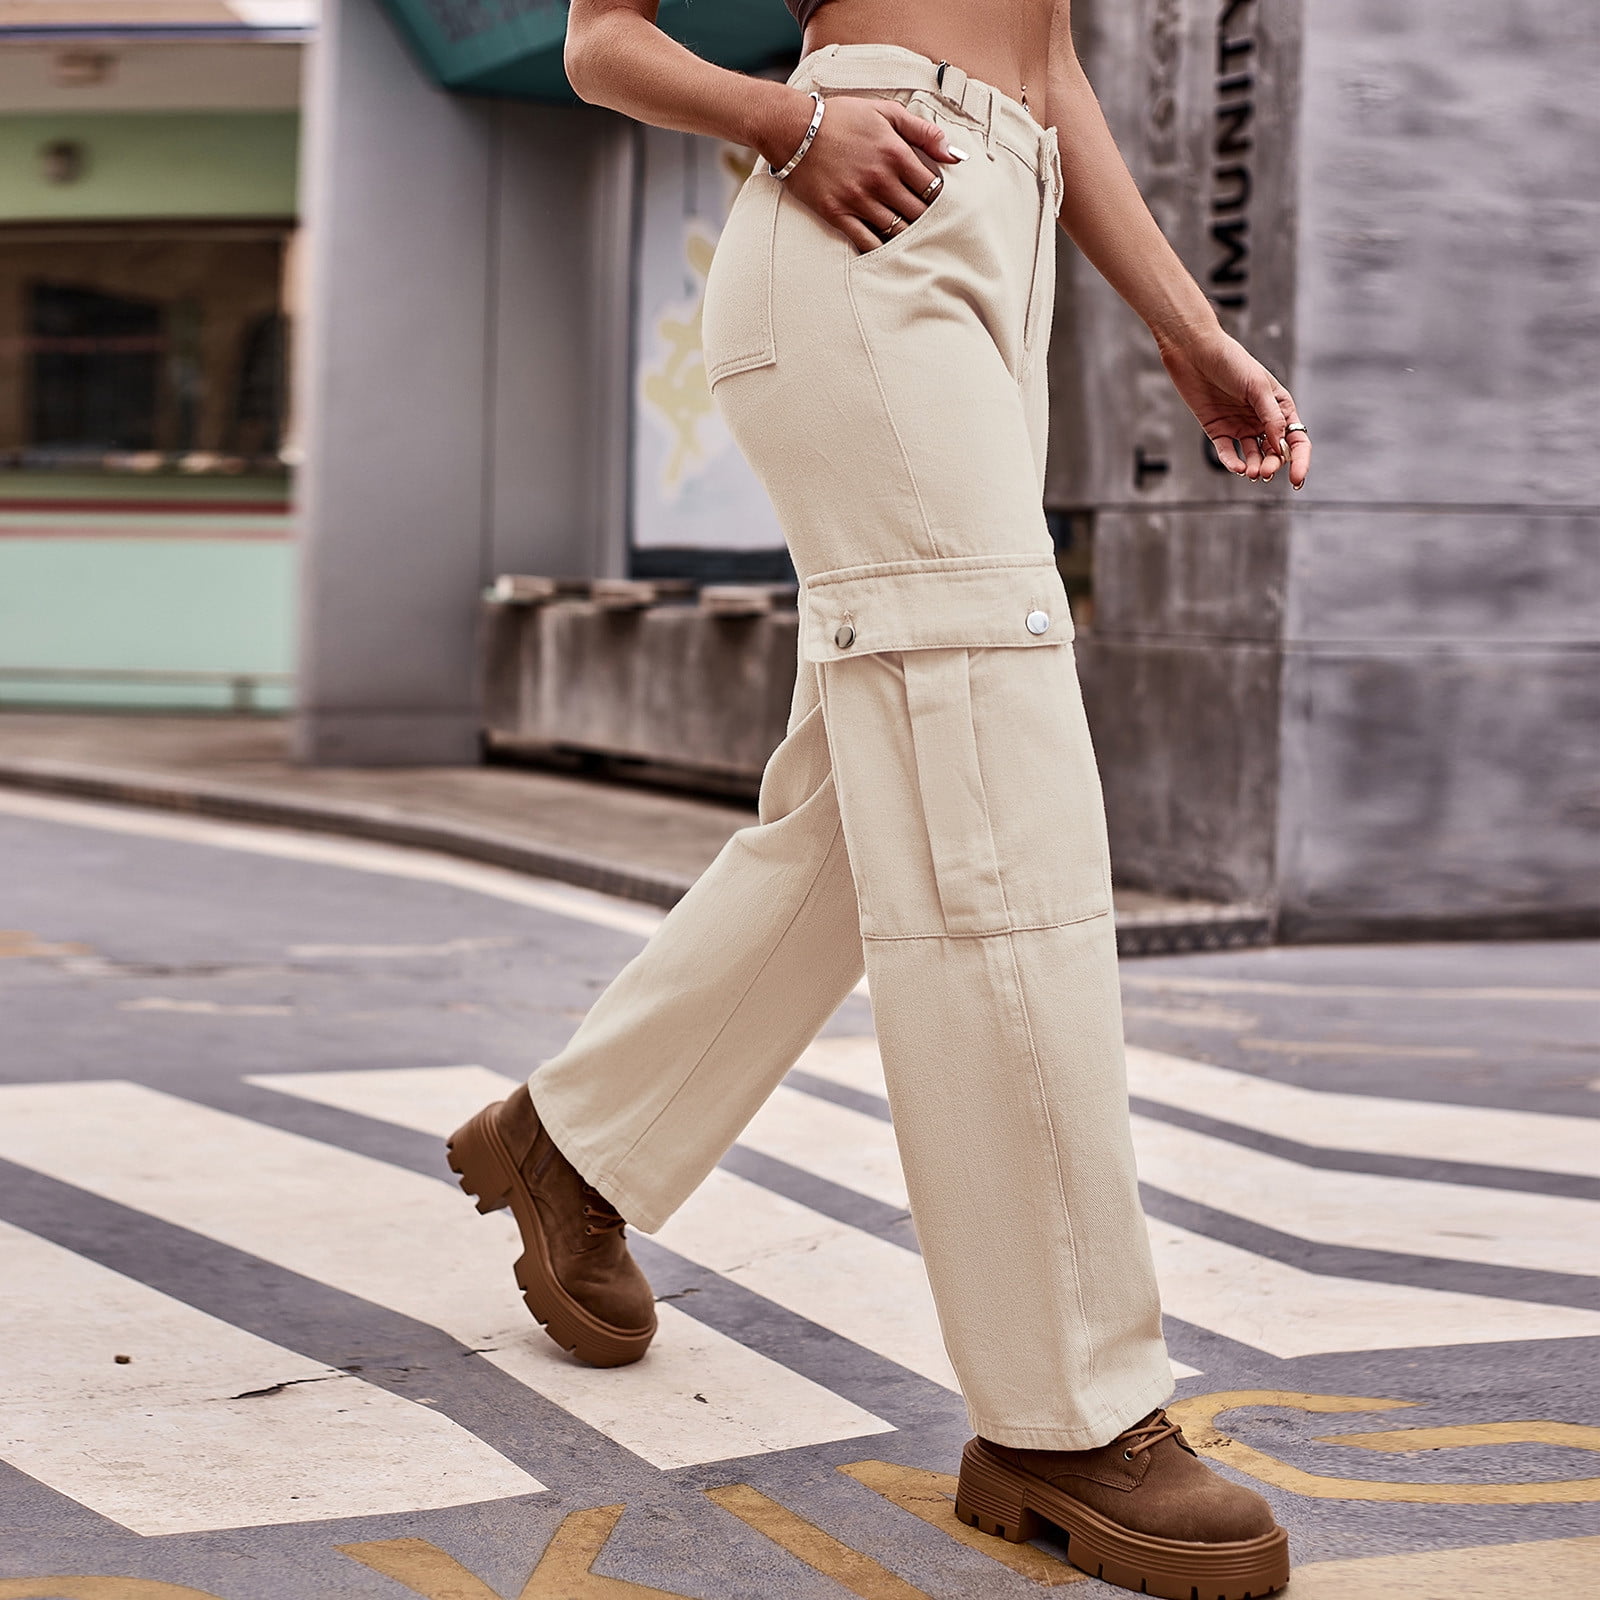 Tdoqot Women's Cargo Pants- Fashion Pockets Khaki Size S Walmart.com